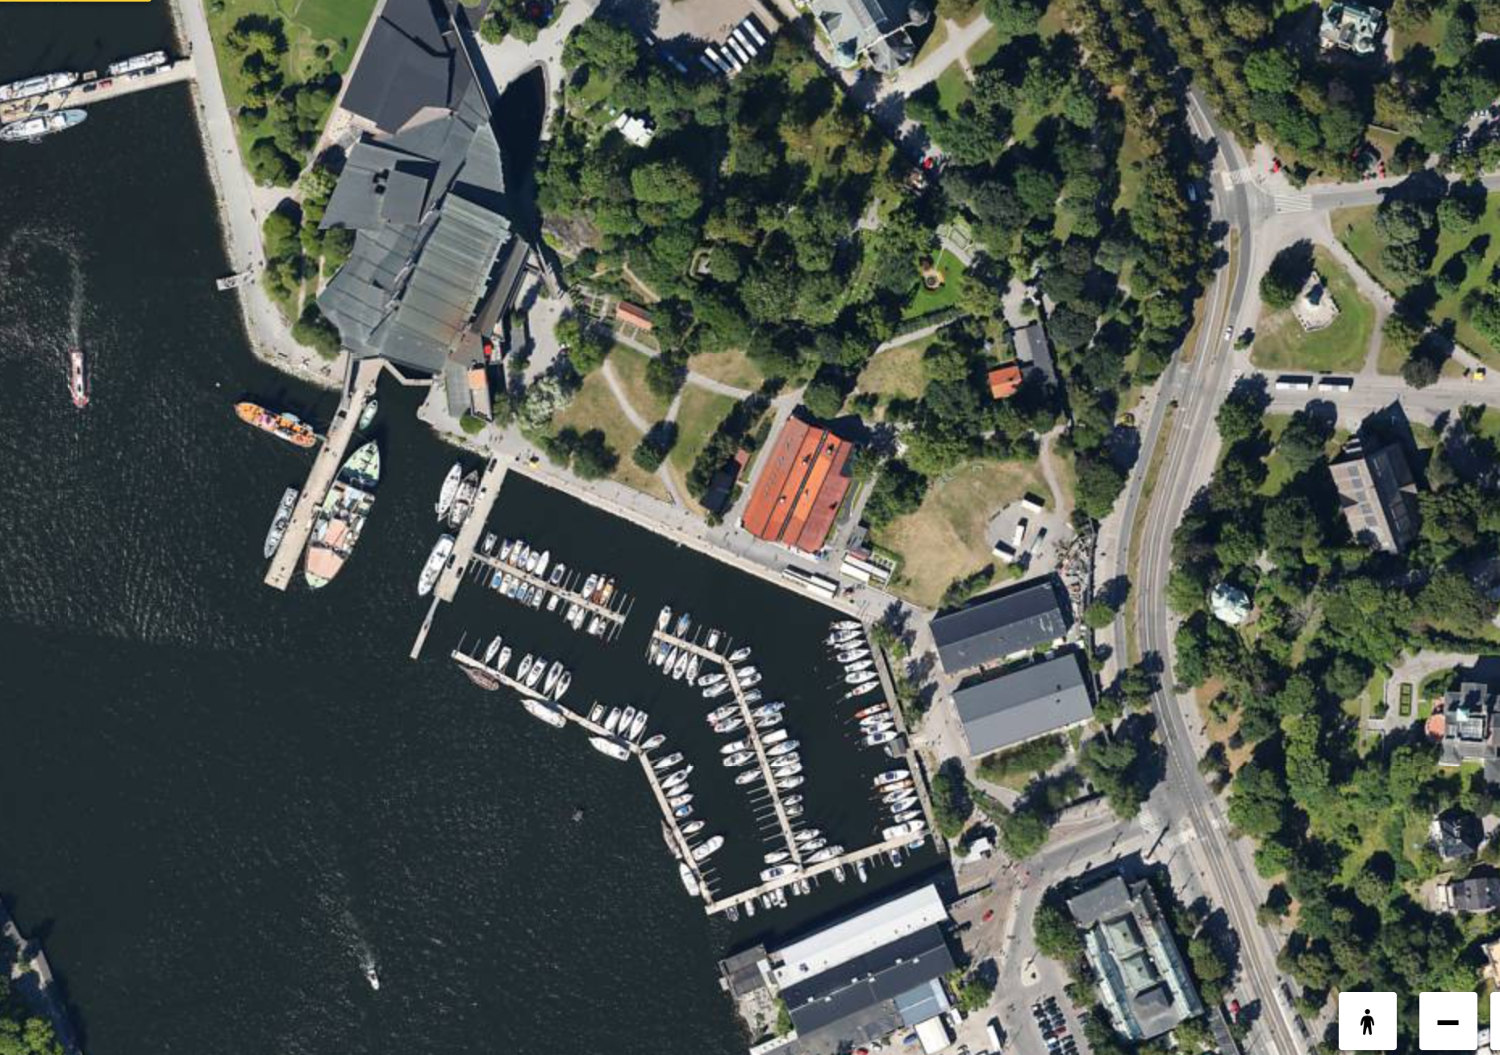 Wasahamn marina in Stockholm - Cruising Attitude Sailing Blog | Discovery 55